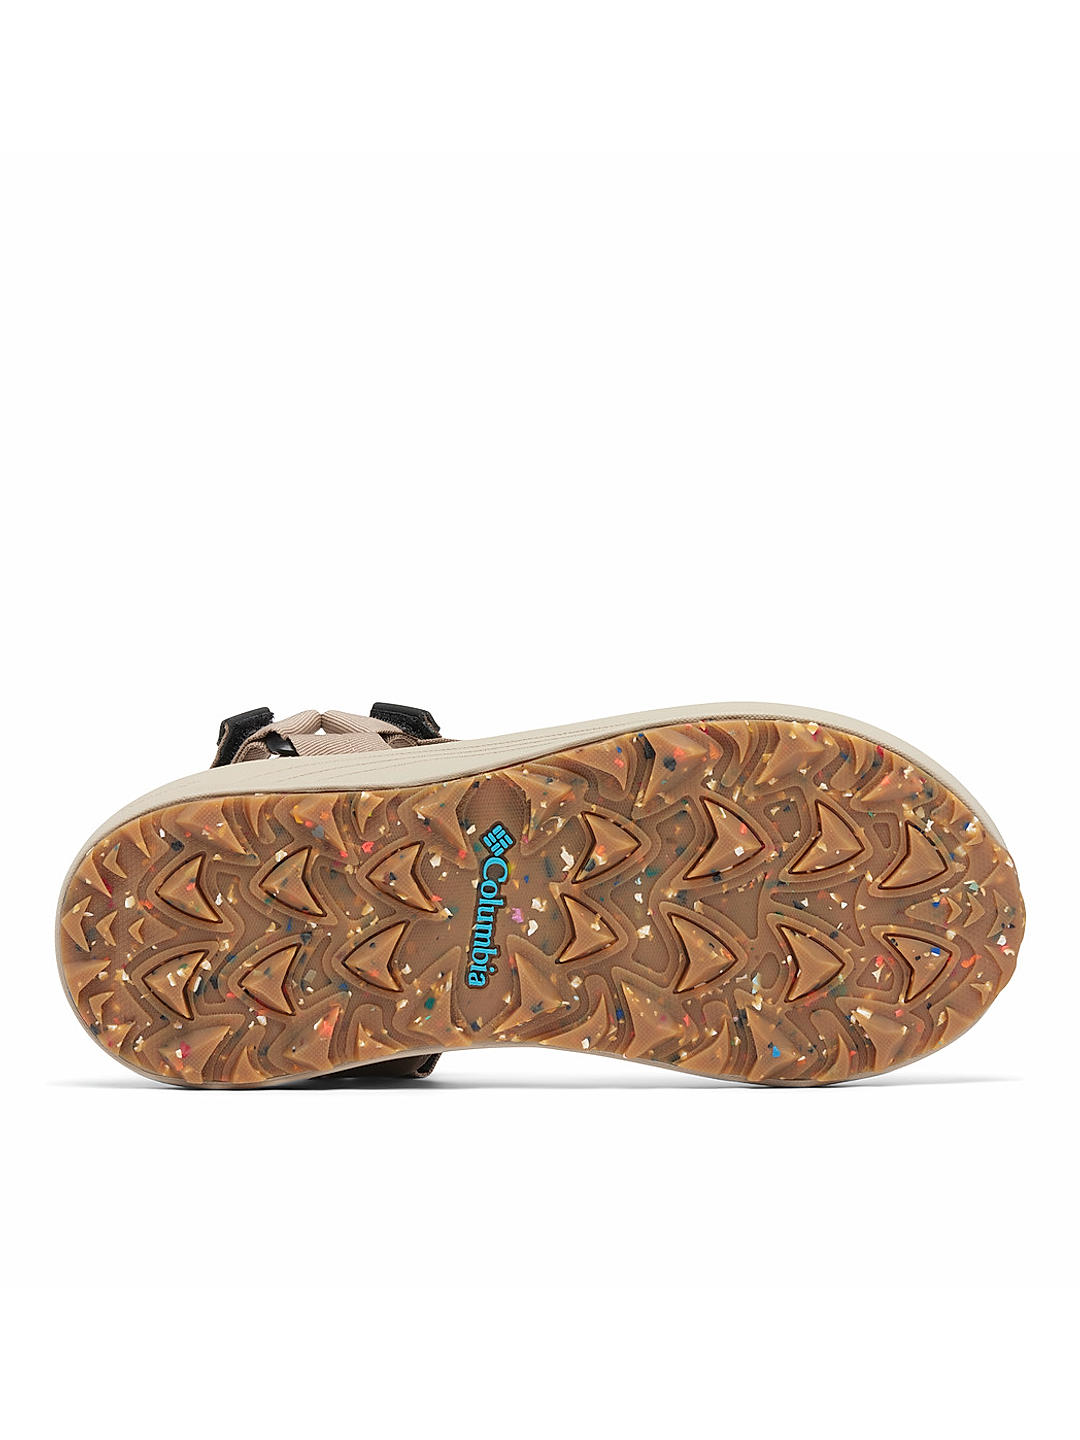 FREE Shipchild's Original Rope Sandal in Beige - Etsy | Rope sandals,  Sandals, Beige